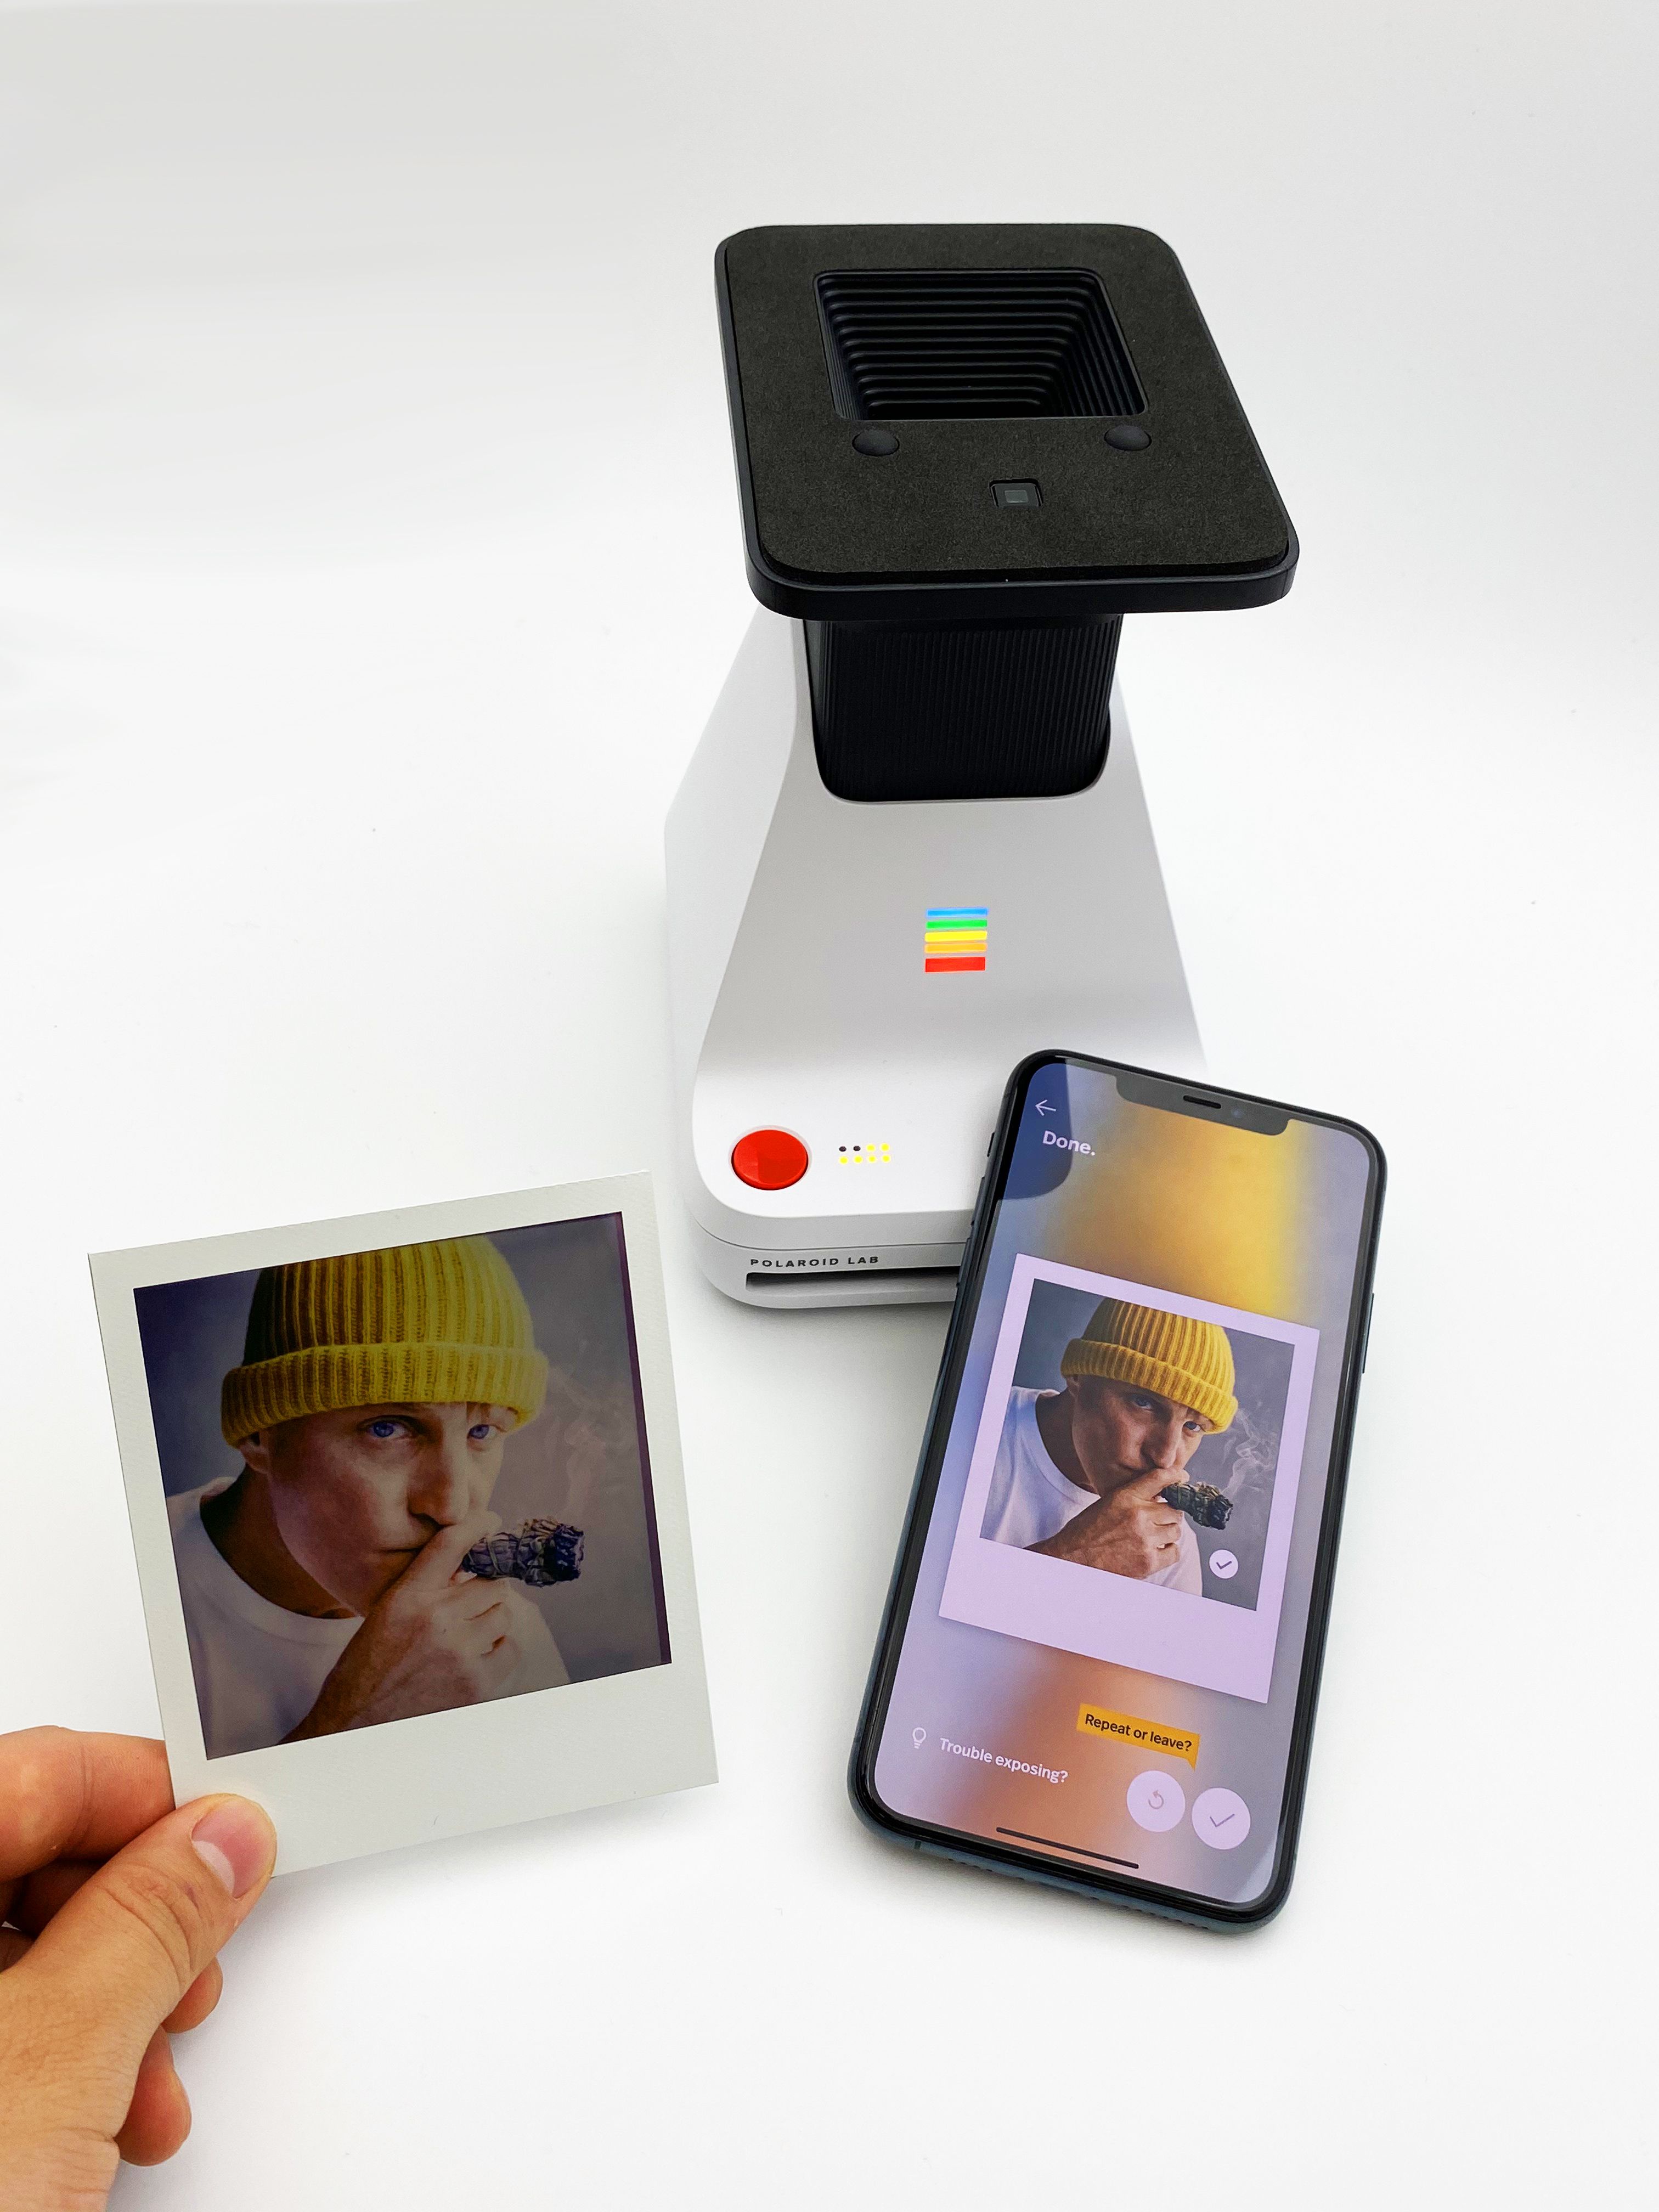 Polaroid Lab - Instant Photo Printer